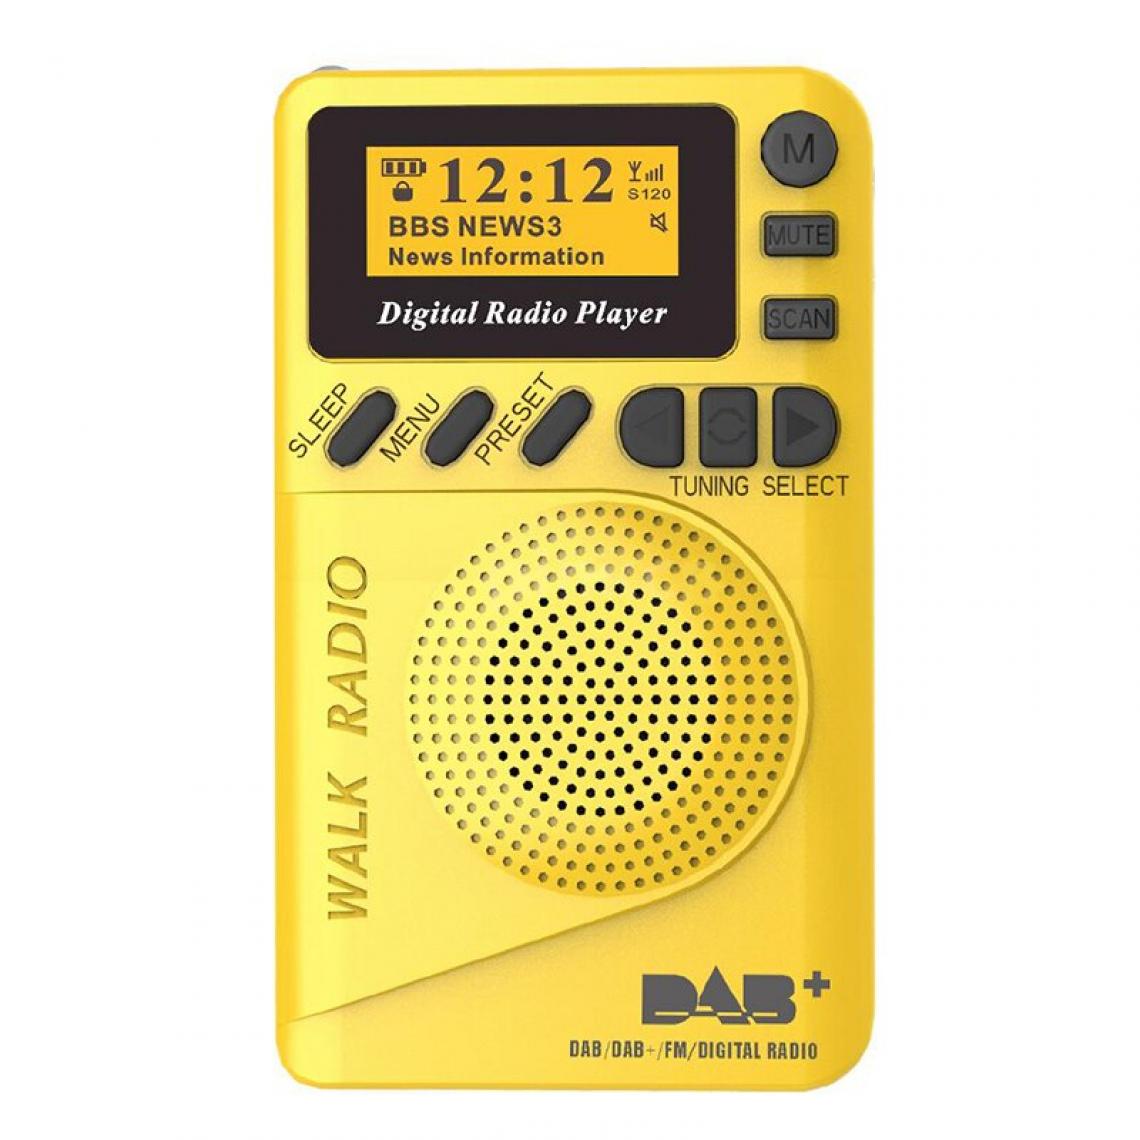 Universal - Radio de poche Portable DAB + Radio numérique Batterie rechargeable Radio FM Affichage LCD Prise UE Haut-parleur Drop Transport | Radio(Jaune) - Radio